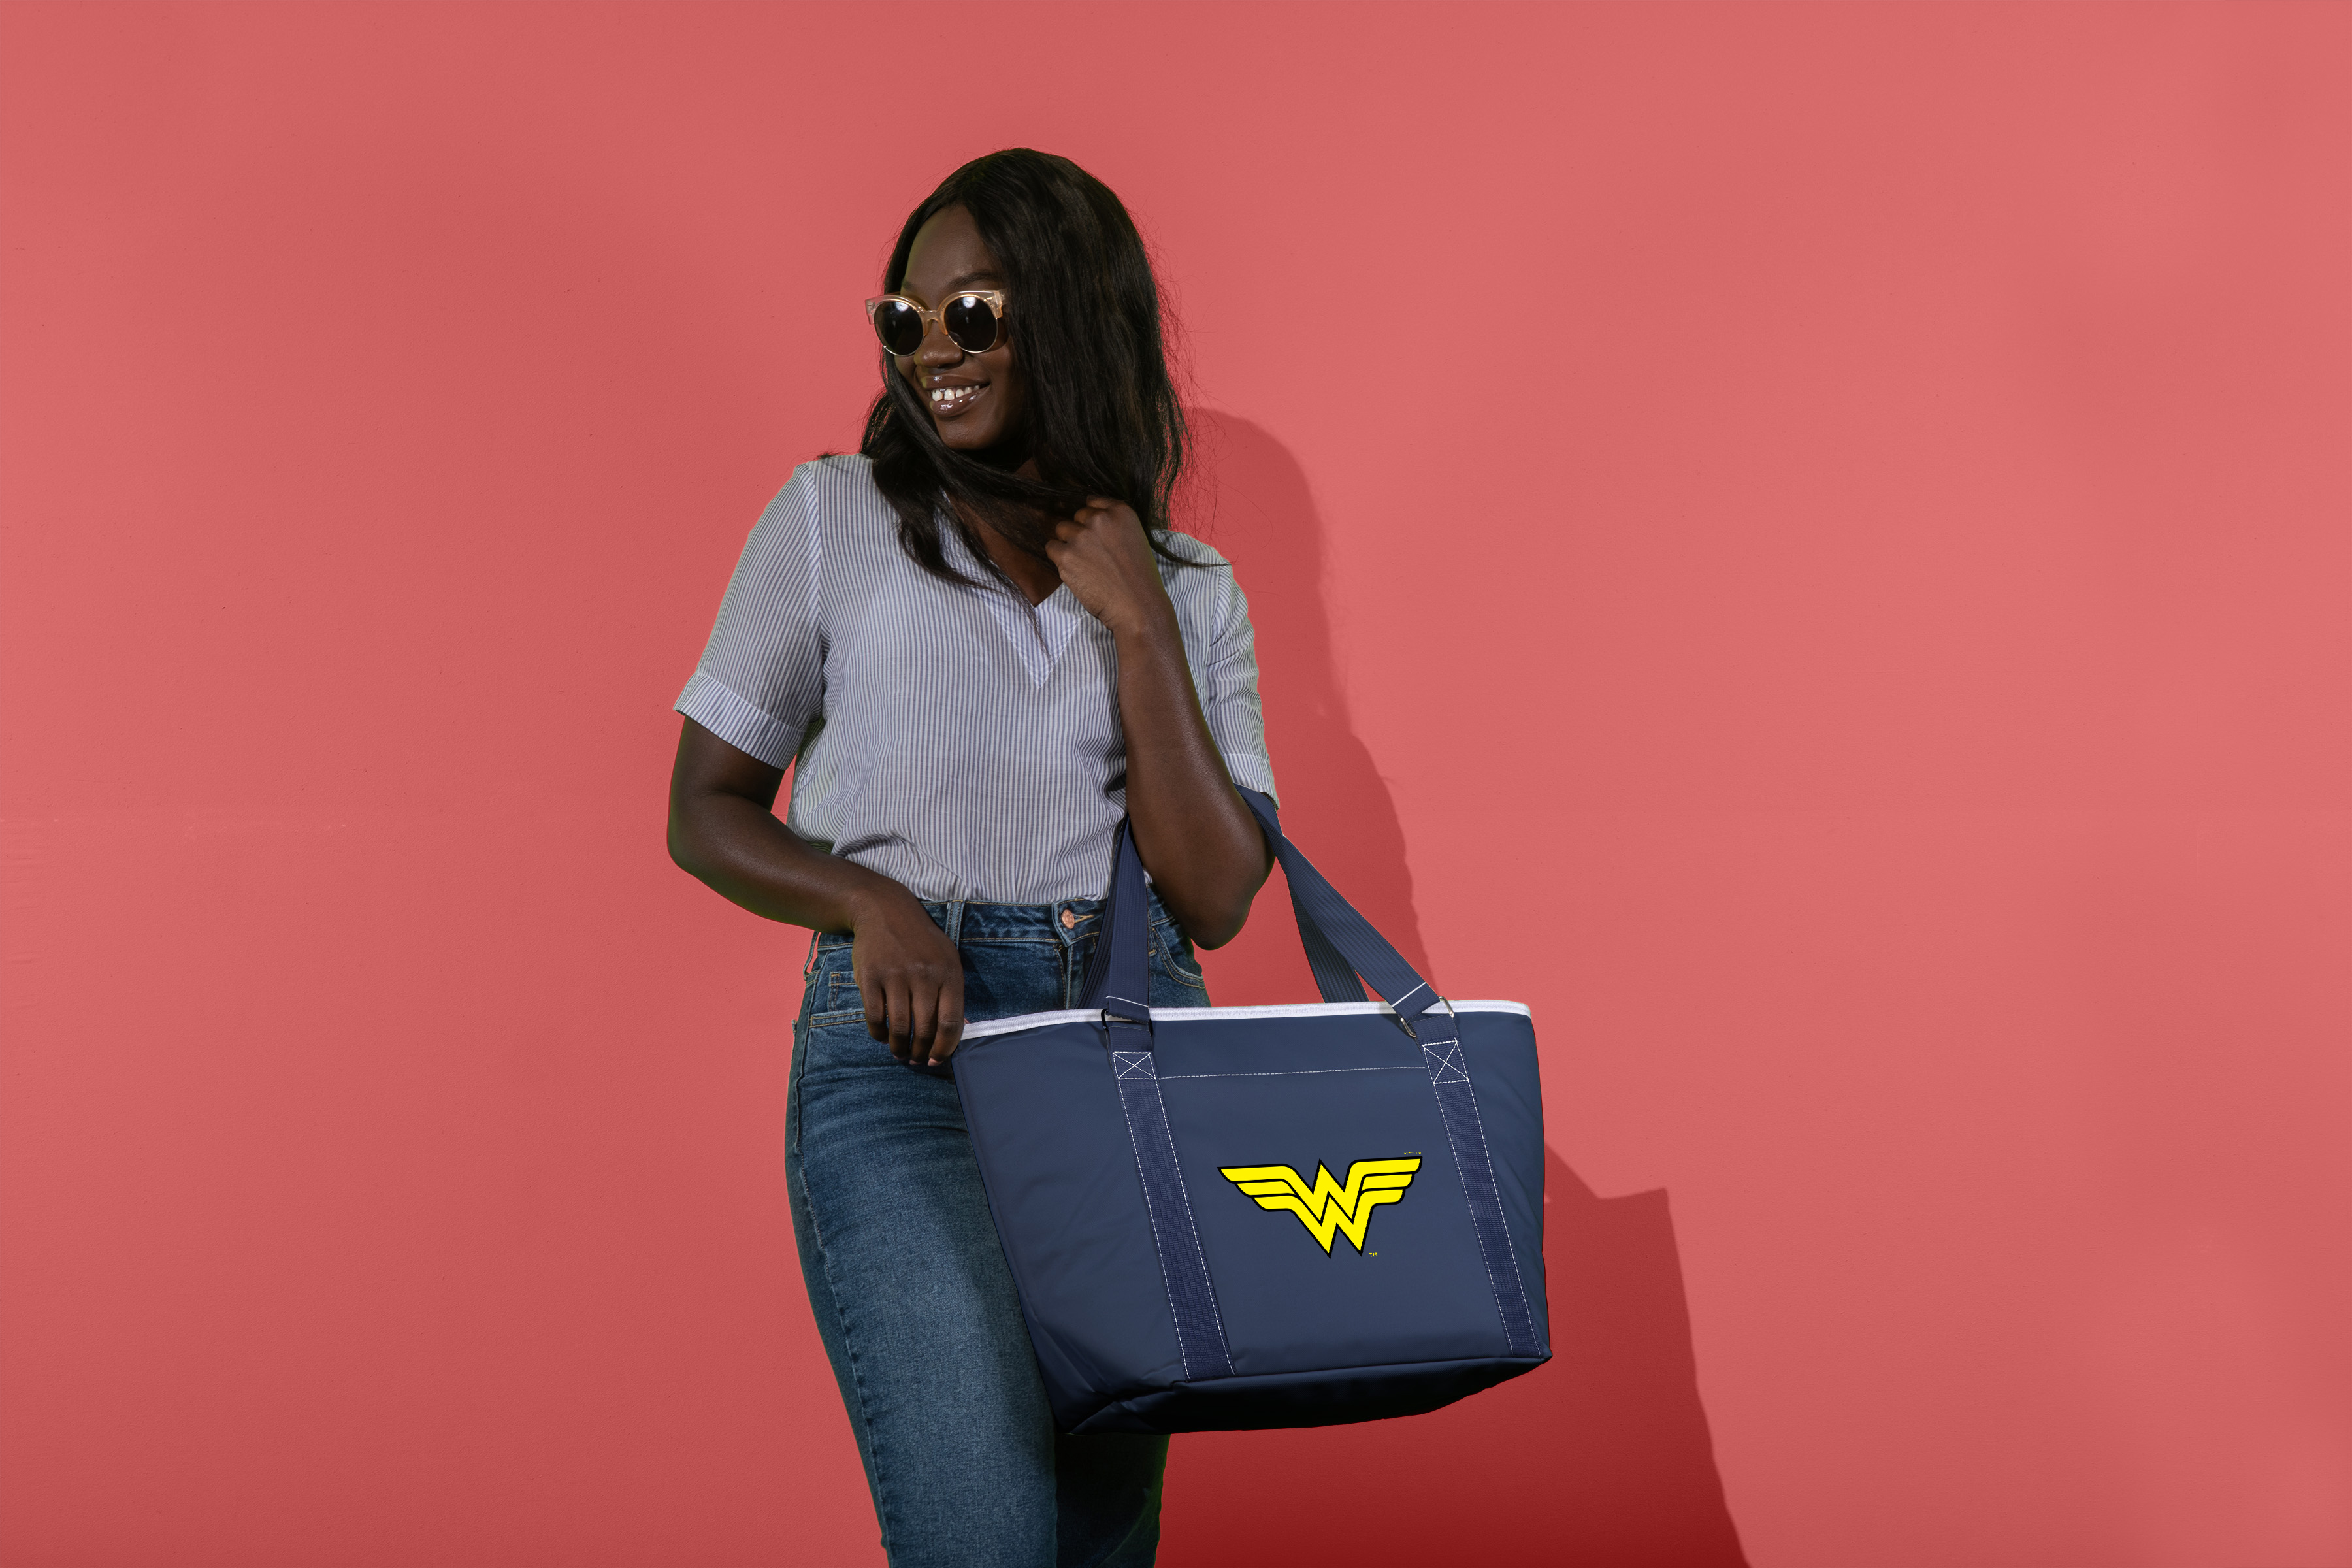 Wonder Woman - Topanga Cooler Tote Bag